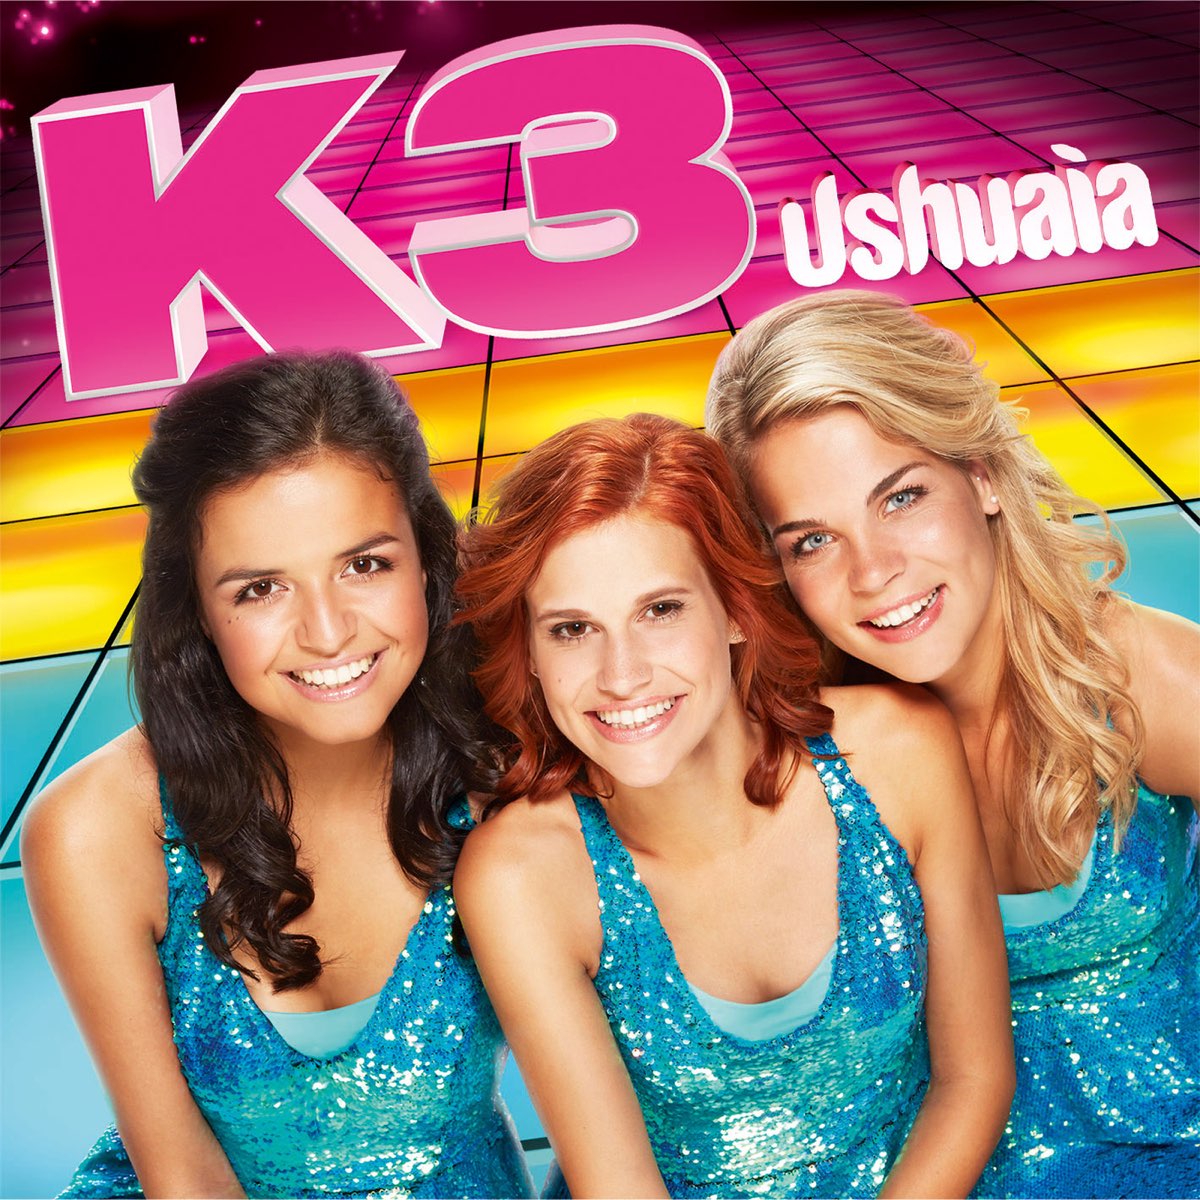 Ushuaia - Album by K3 - Apple Music